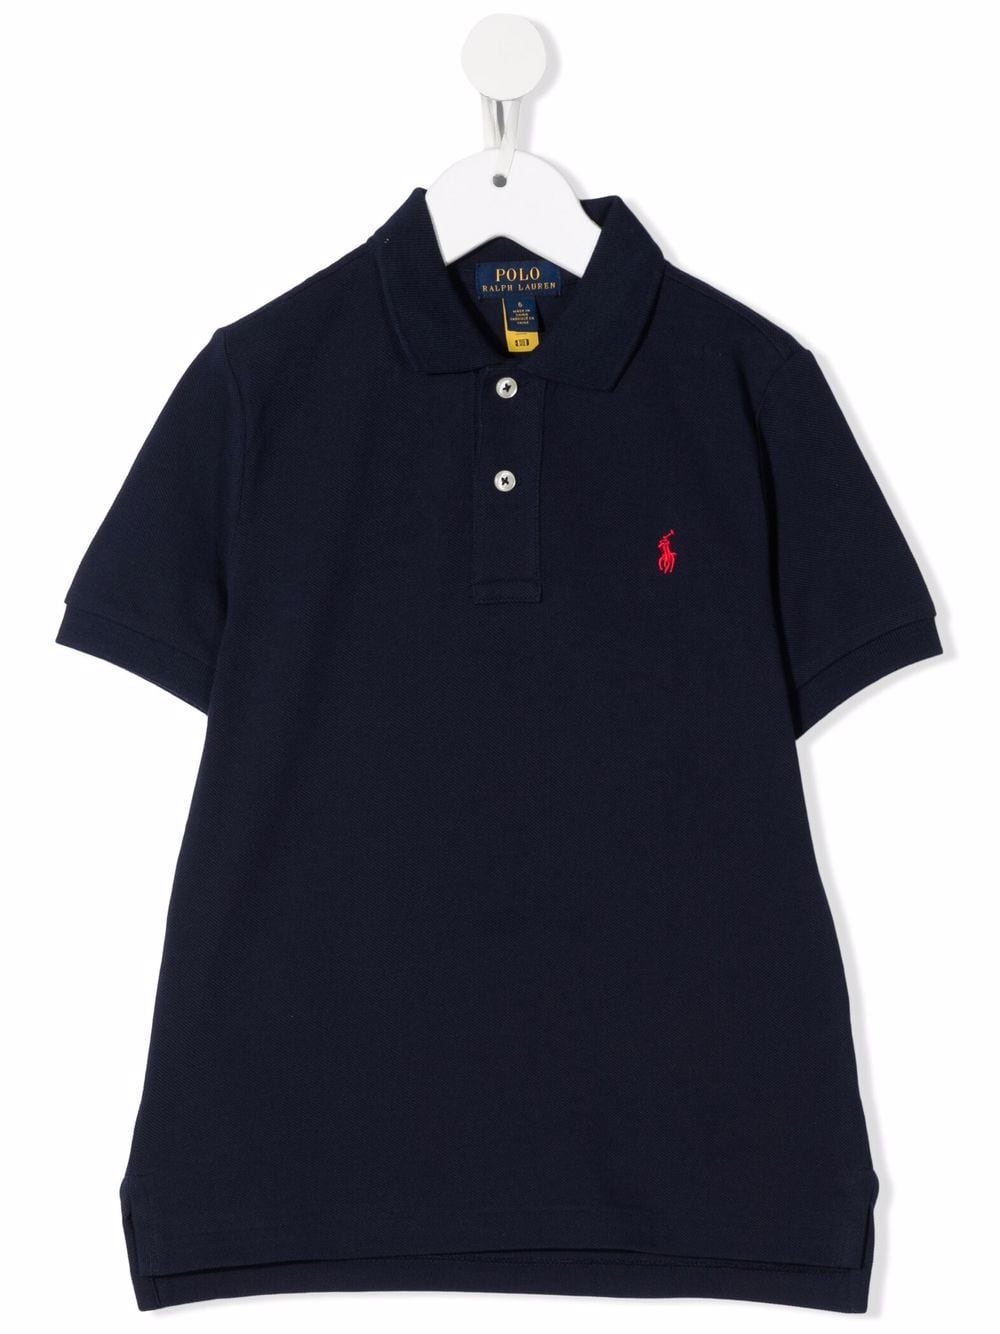 Blue polo shirt for boys with logo